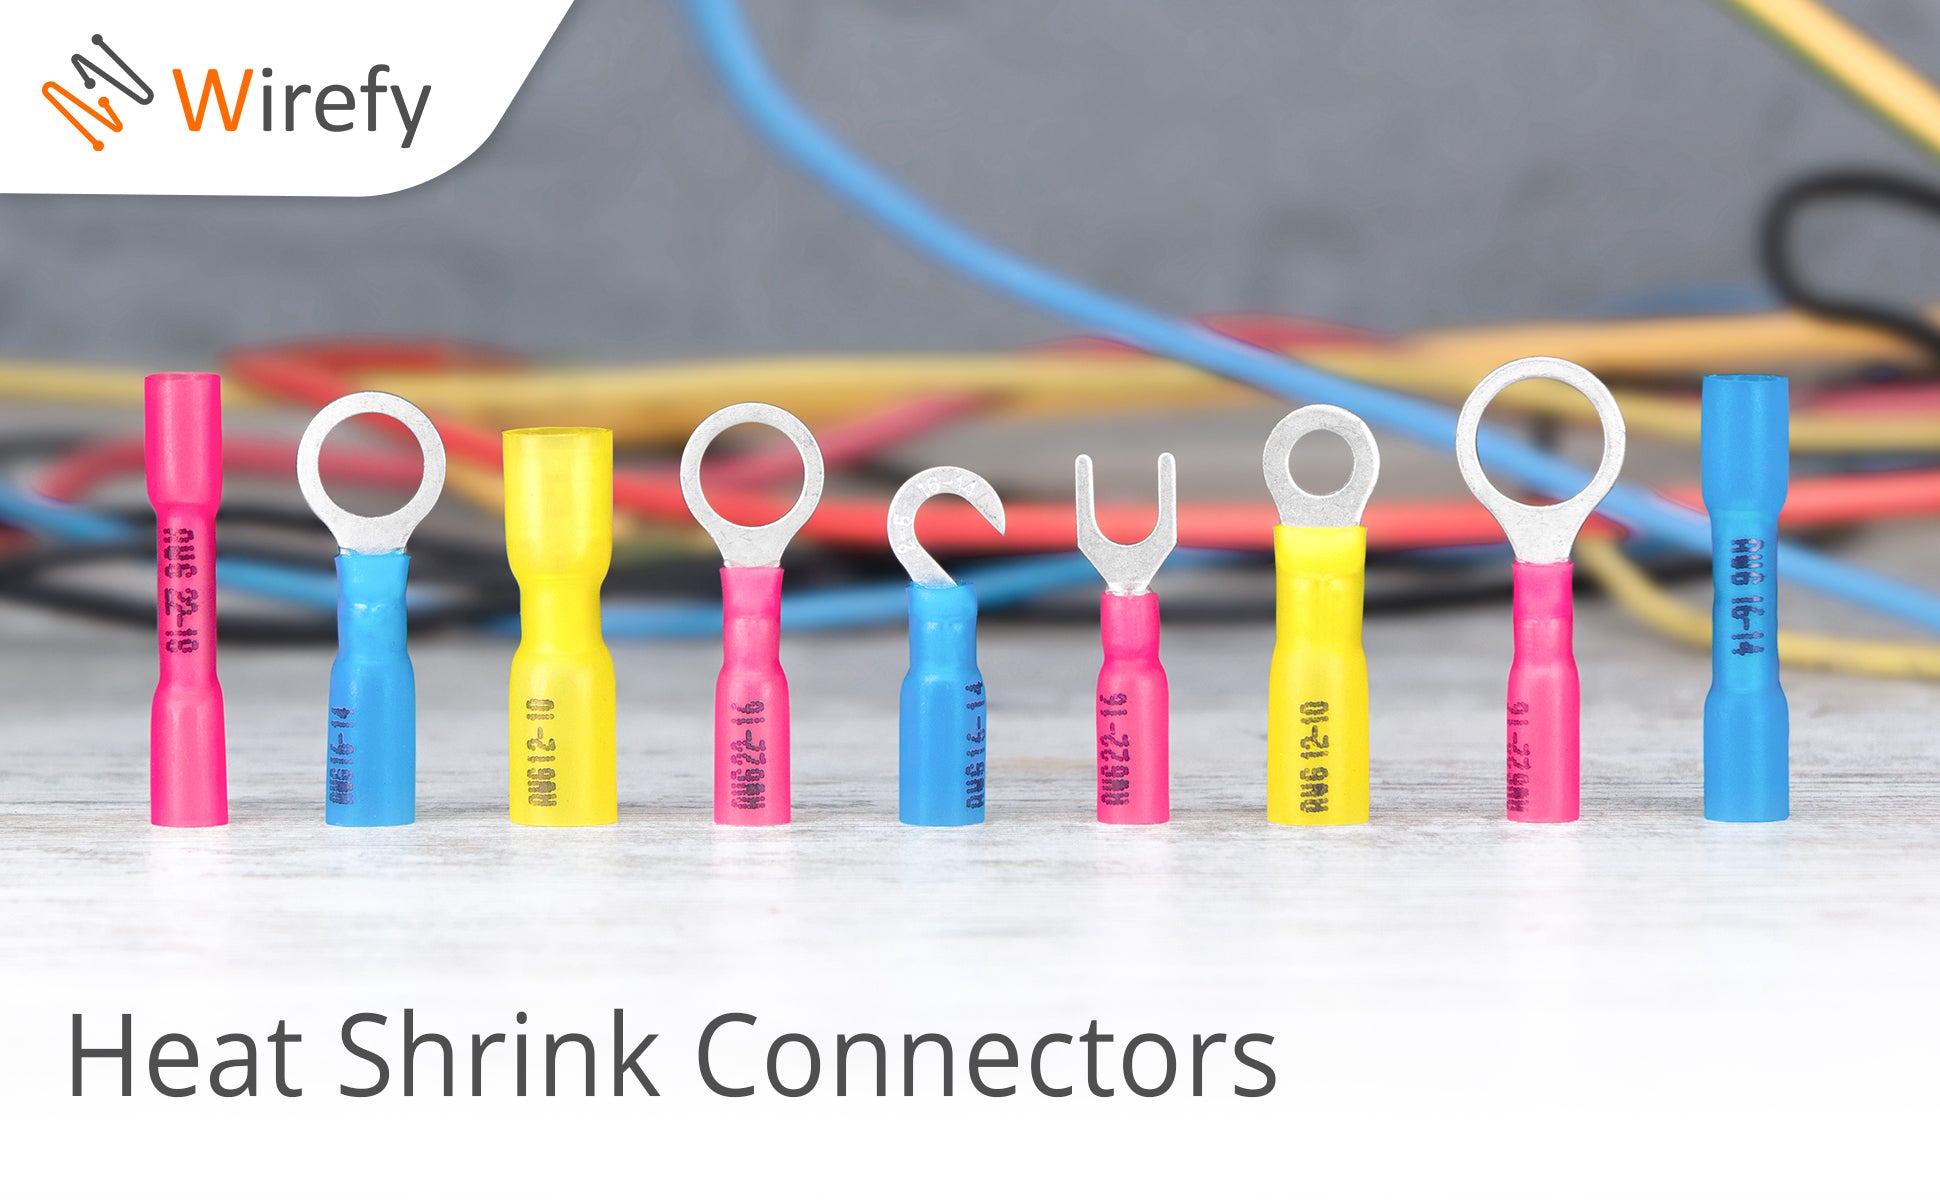 wirefy heat shrink connectors versatile kit